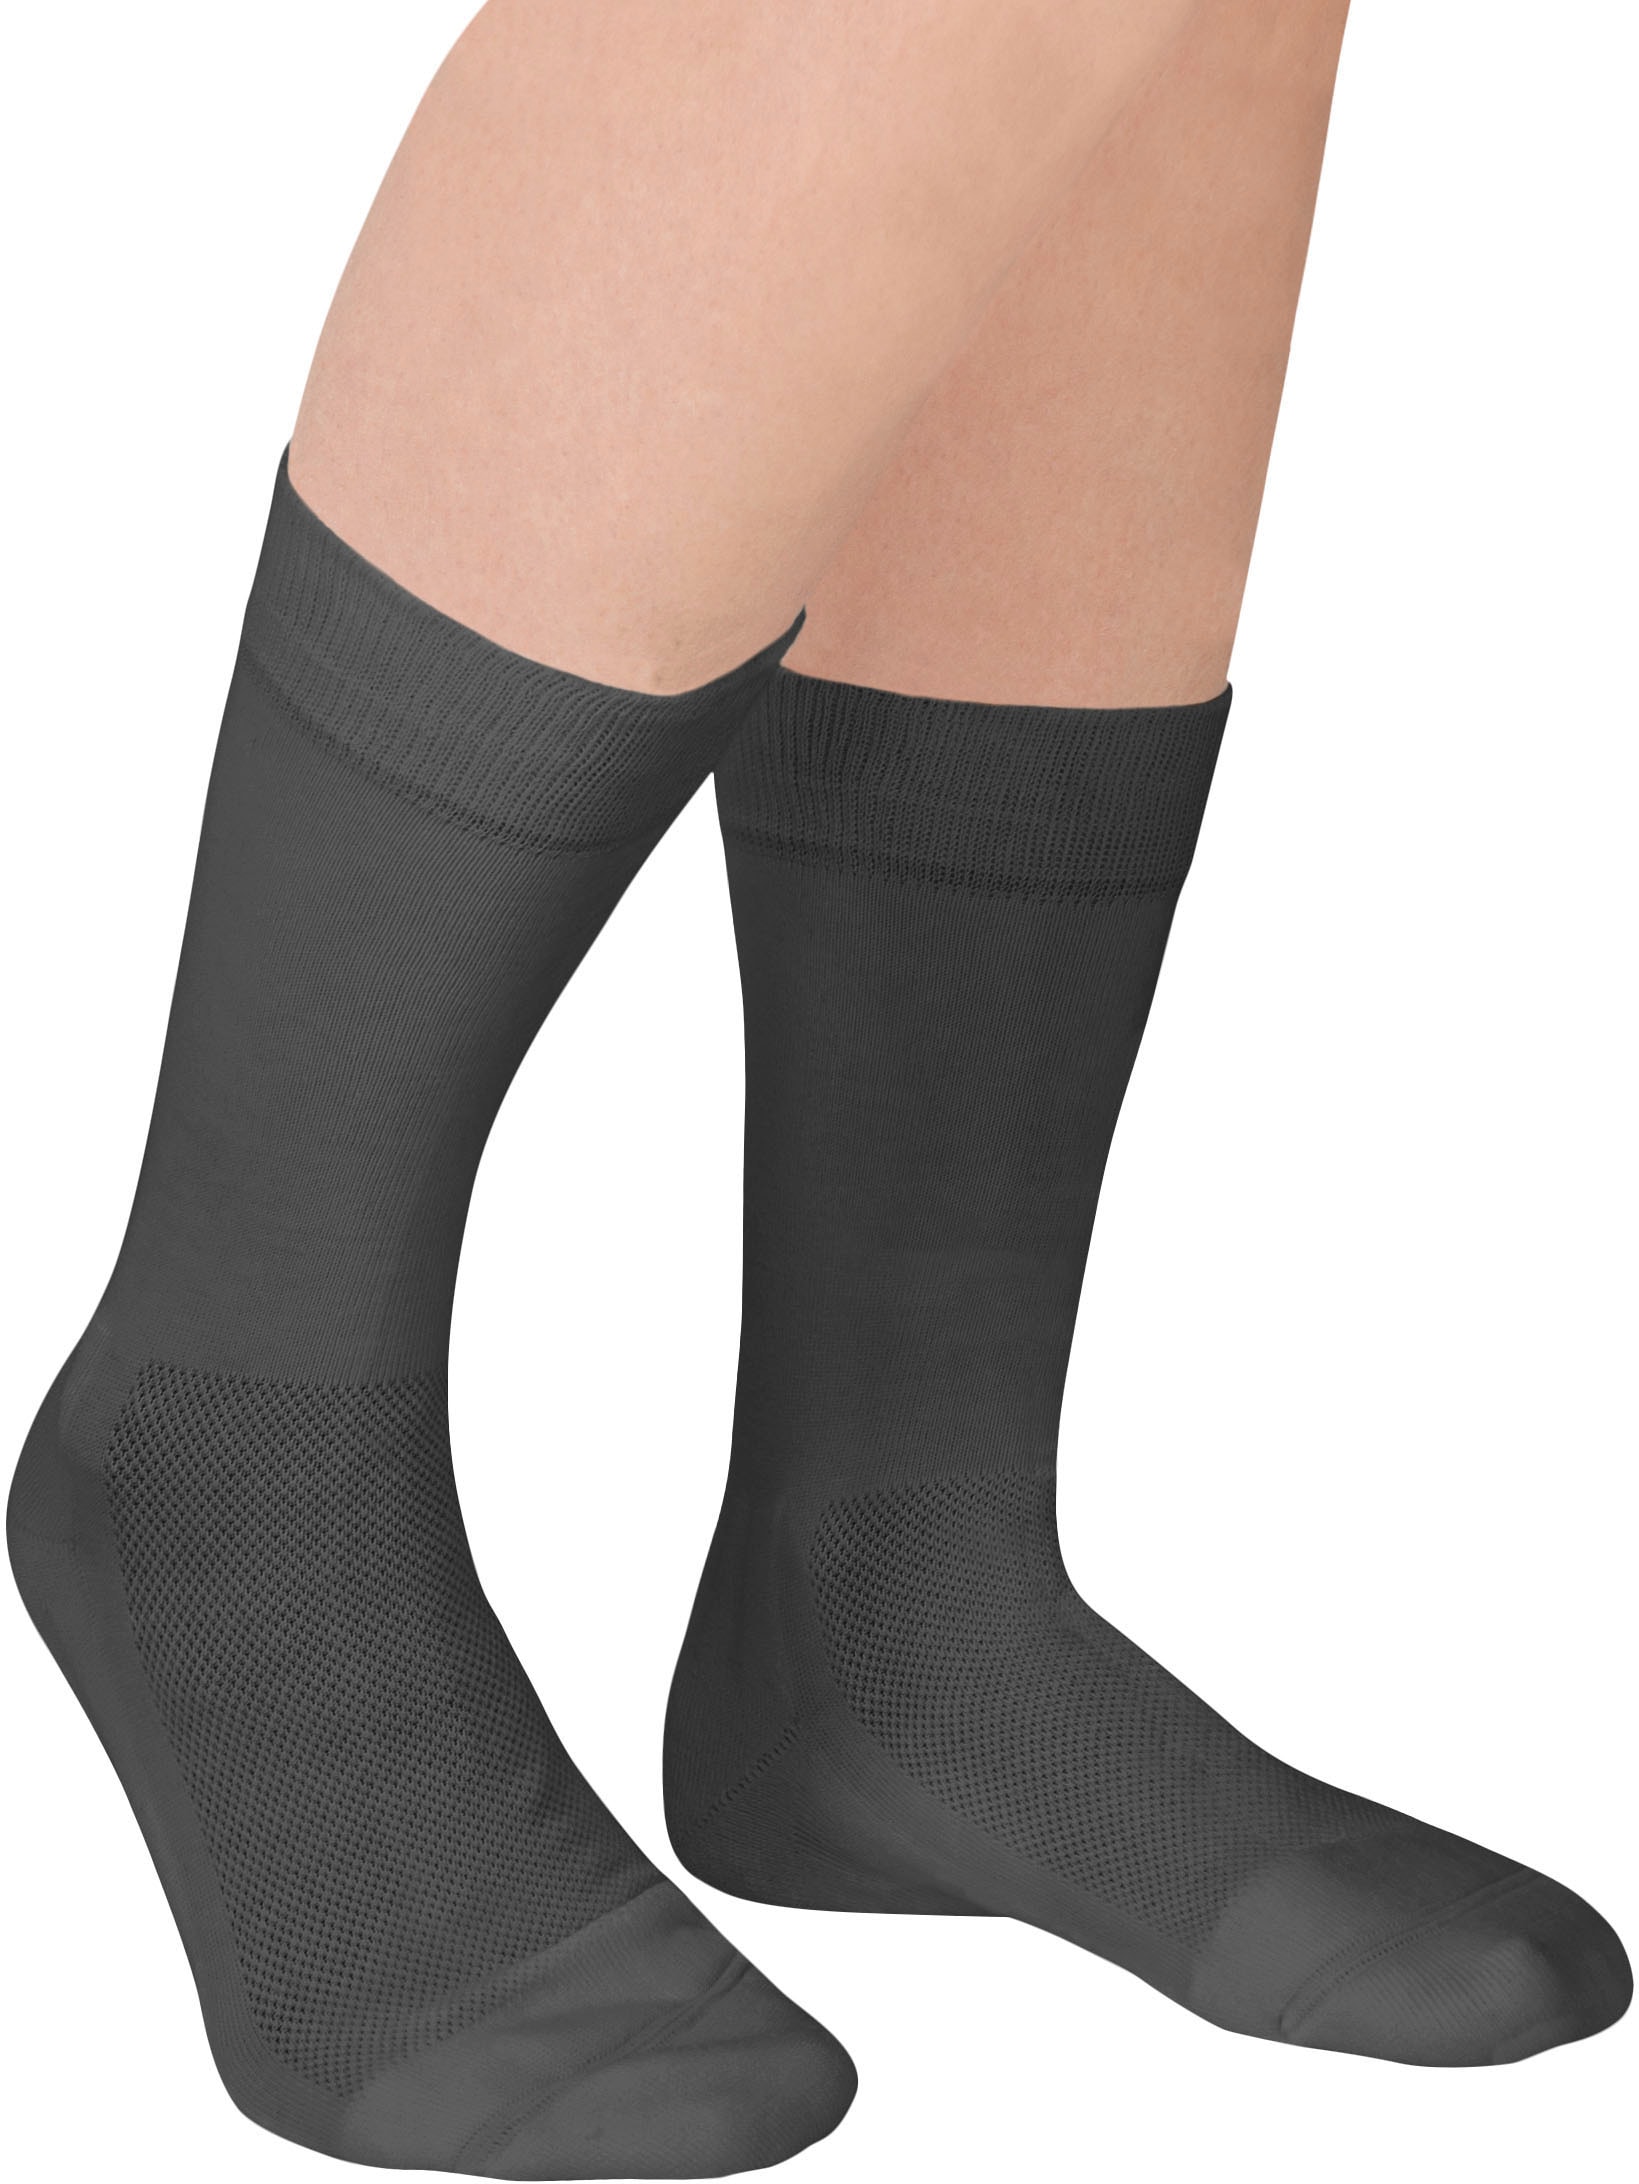 Fußgut Diabetikersocken »Venenfeund Sensitiv Socken«, BAUR | Paar) bestellen (2